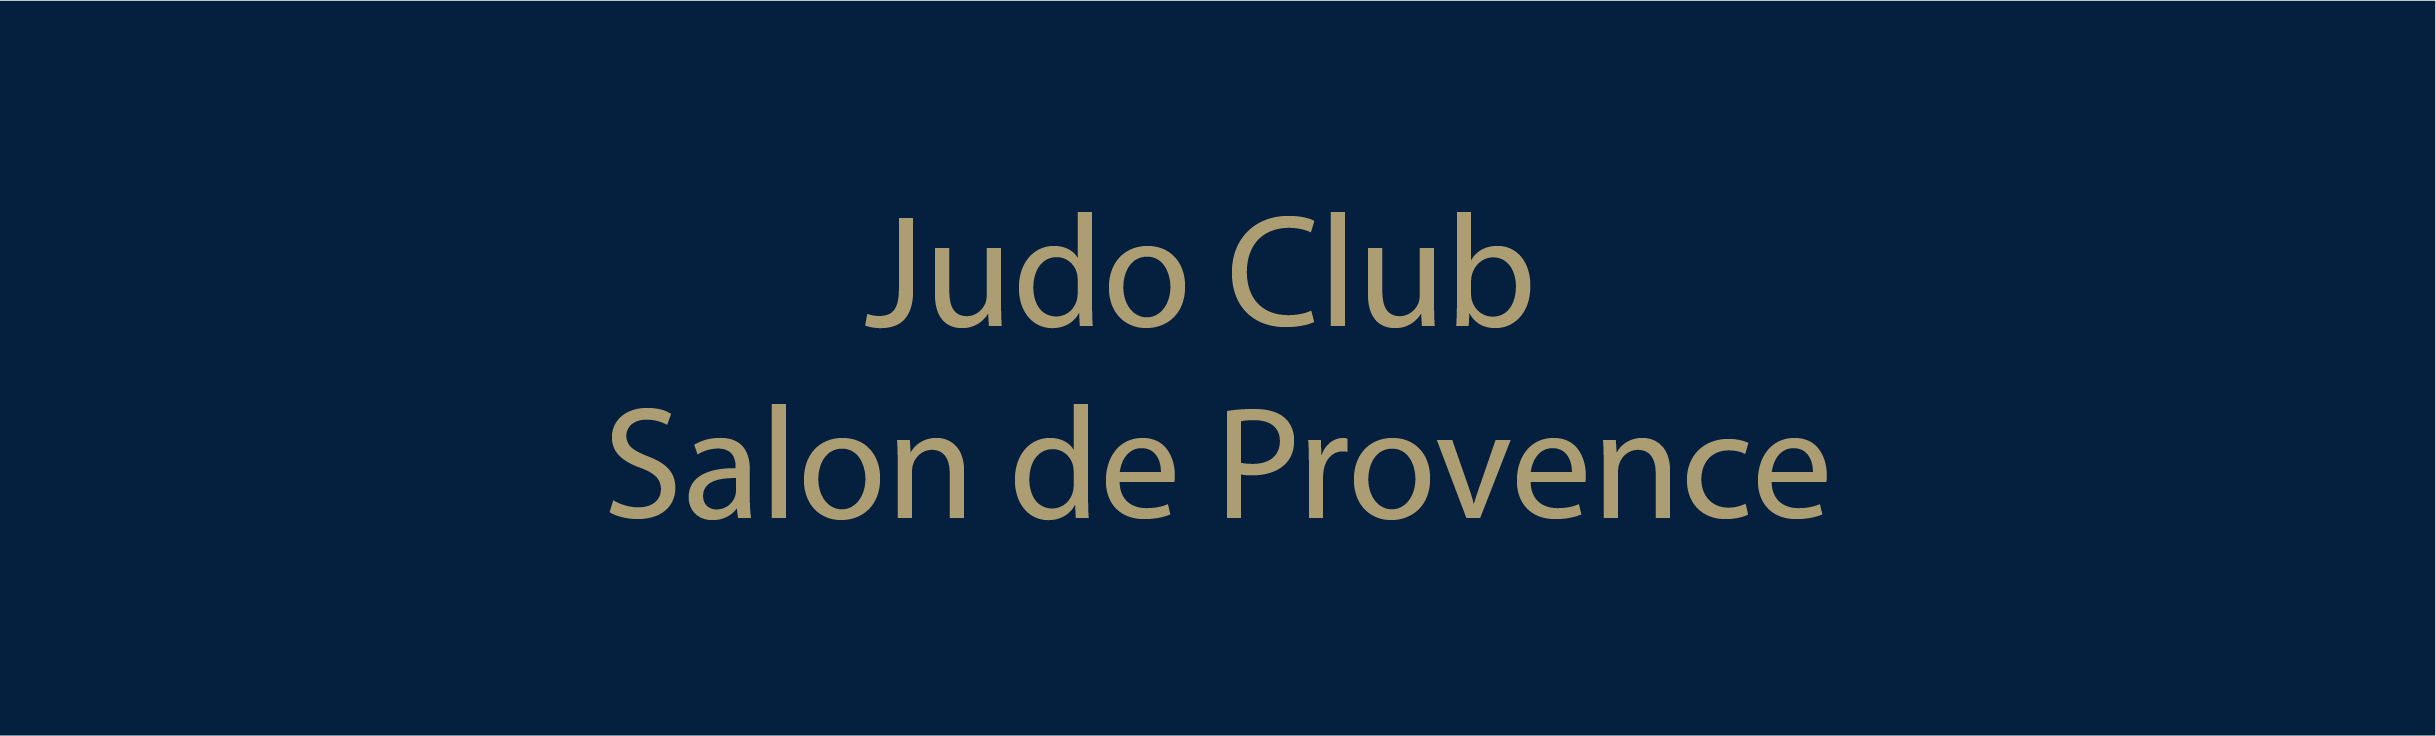 Judo Club Salon de Provence 